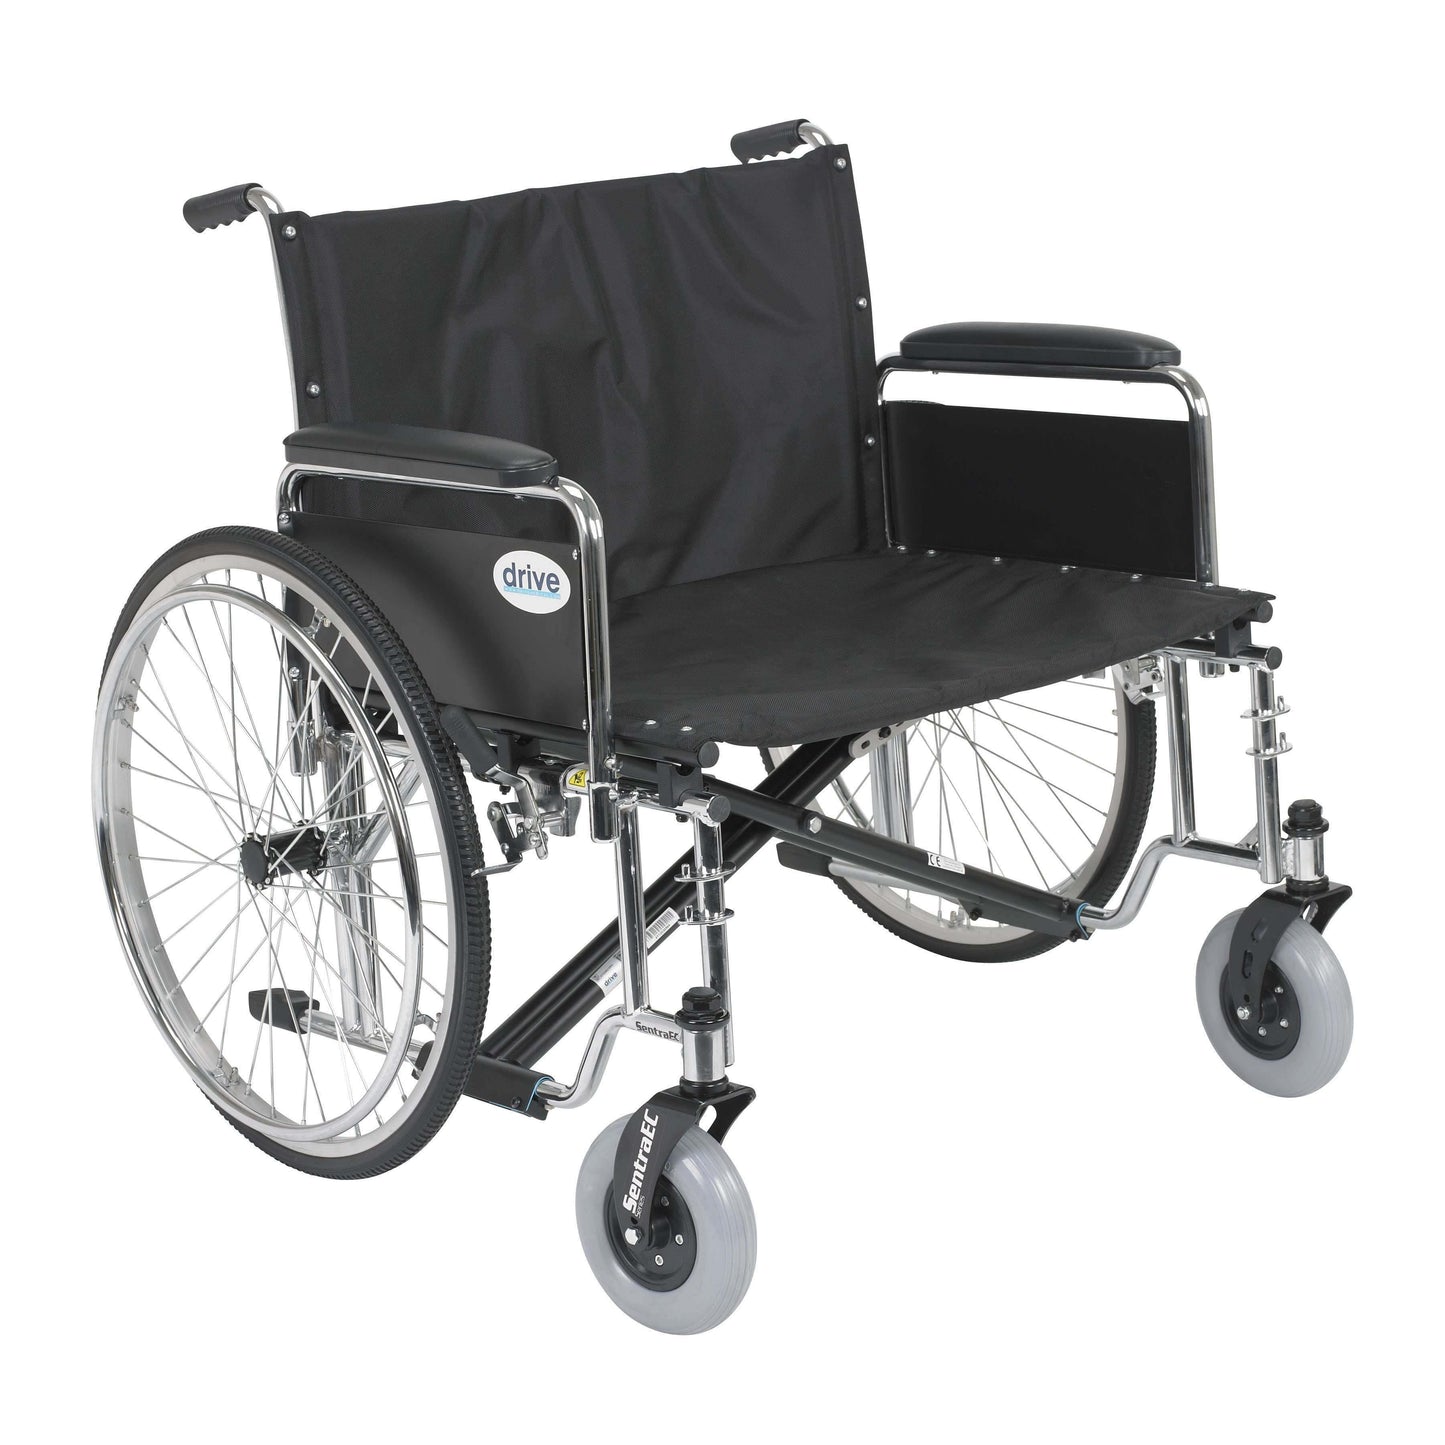 Drive std28ecdfa Sentra EC Heavy Duty Extra Wide Wheelchair, Detachable Full Arms, 28" Seat